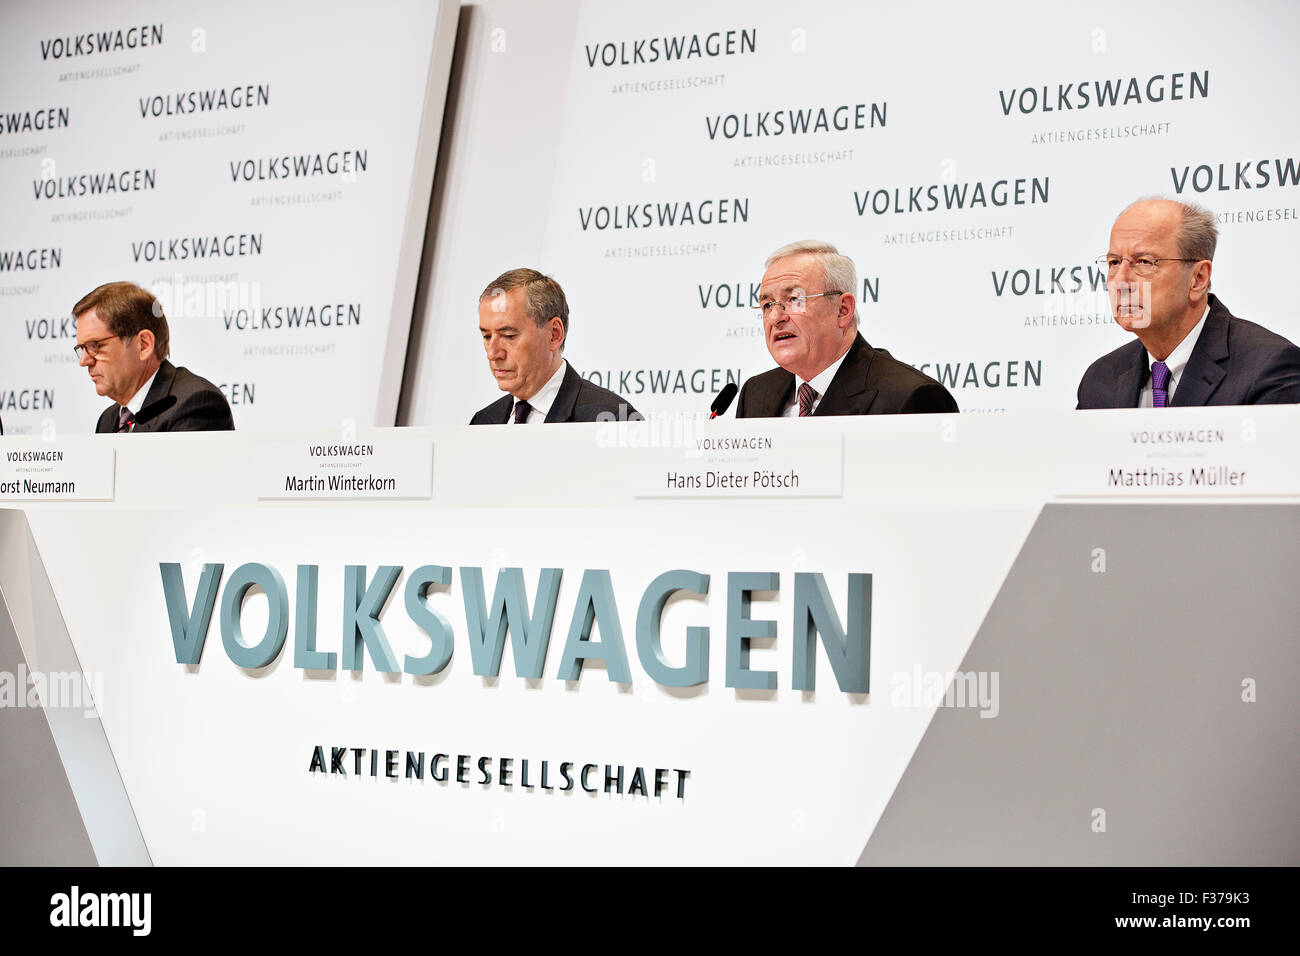 Hans Dieter Poetsch, Martin Winterkorn, Horst Neumann, Jochem Helzmann, VW, Volkswagen Stock Photo